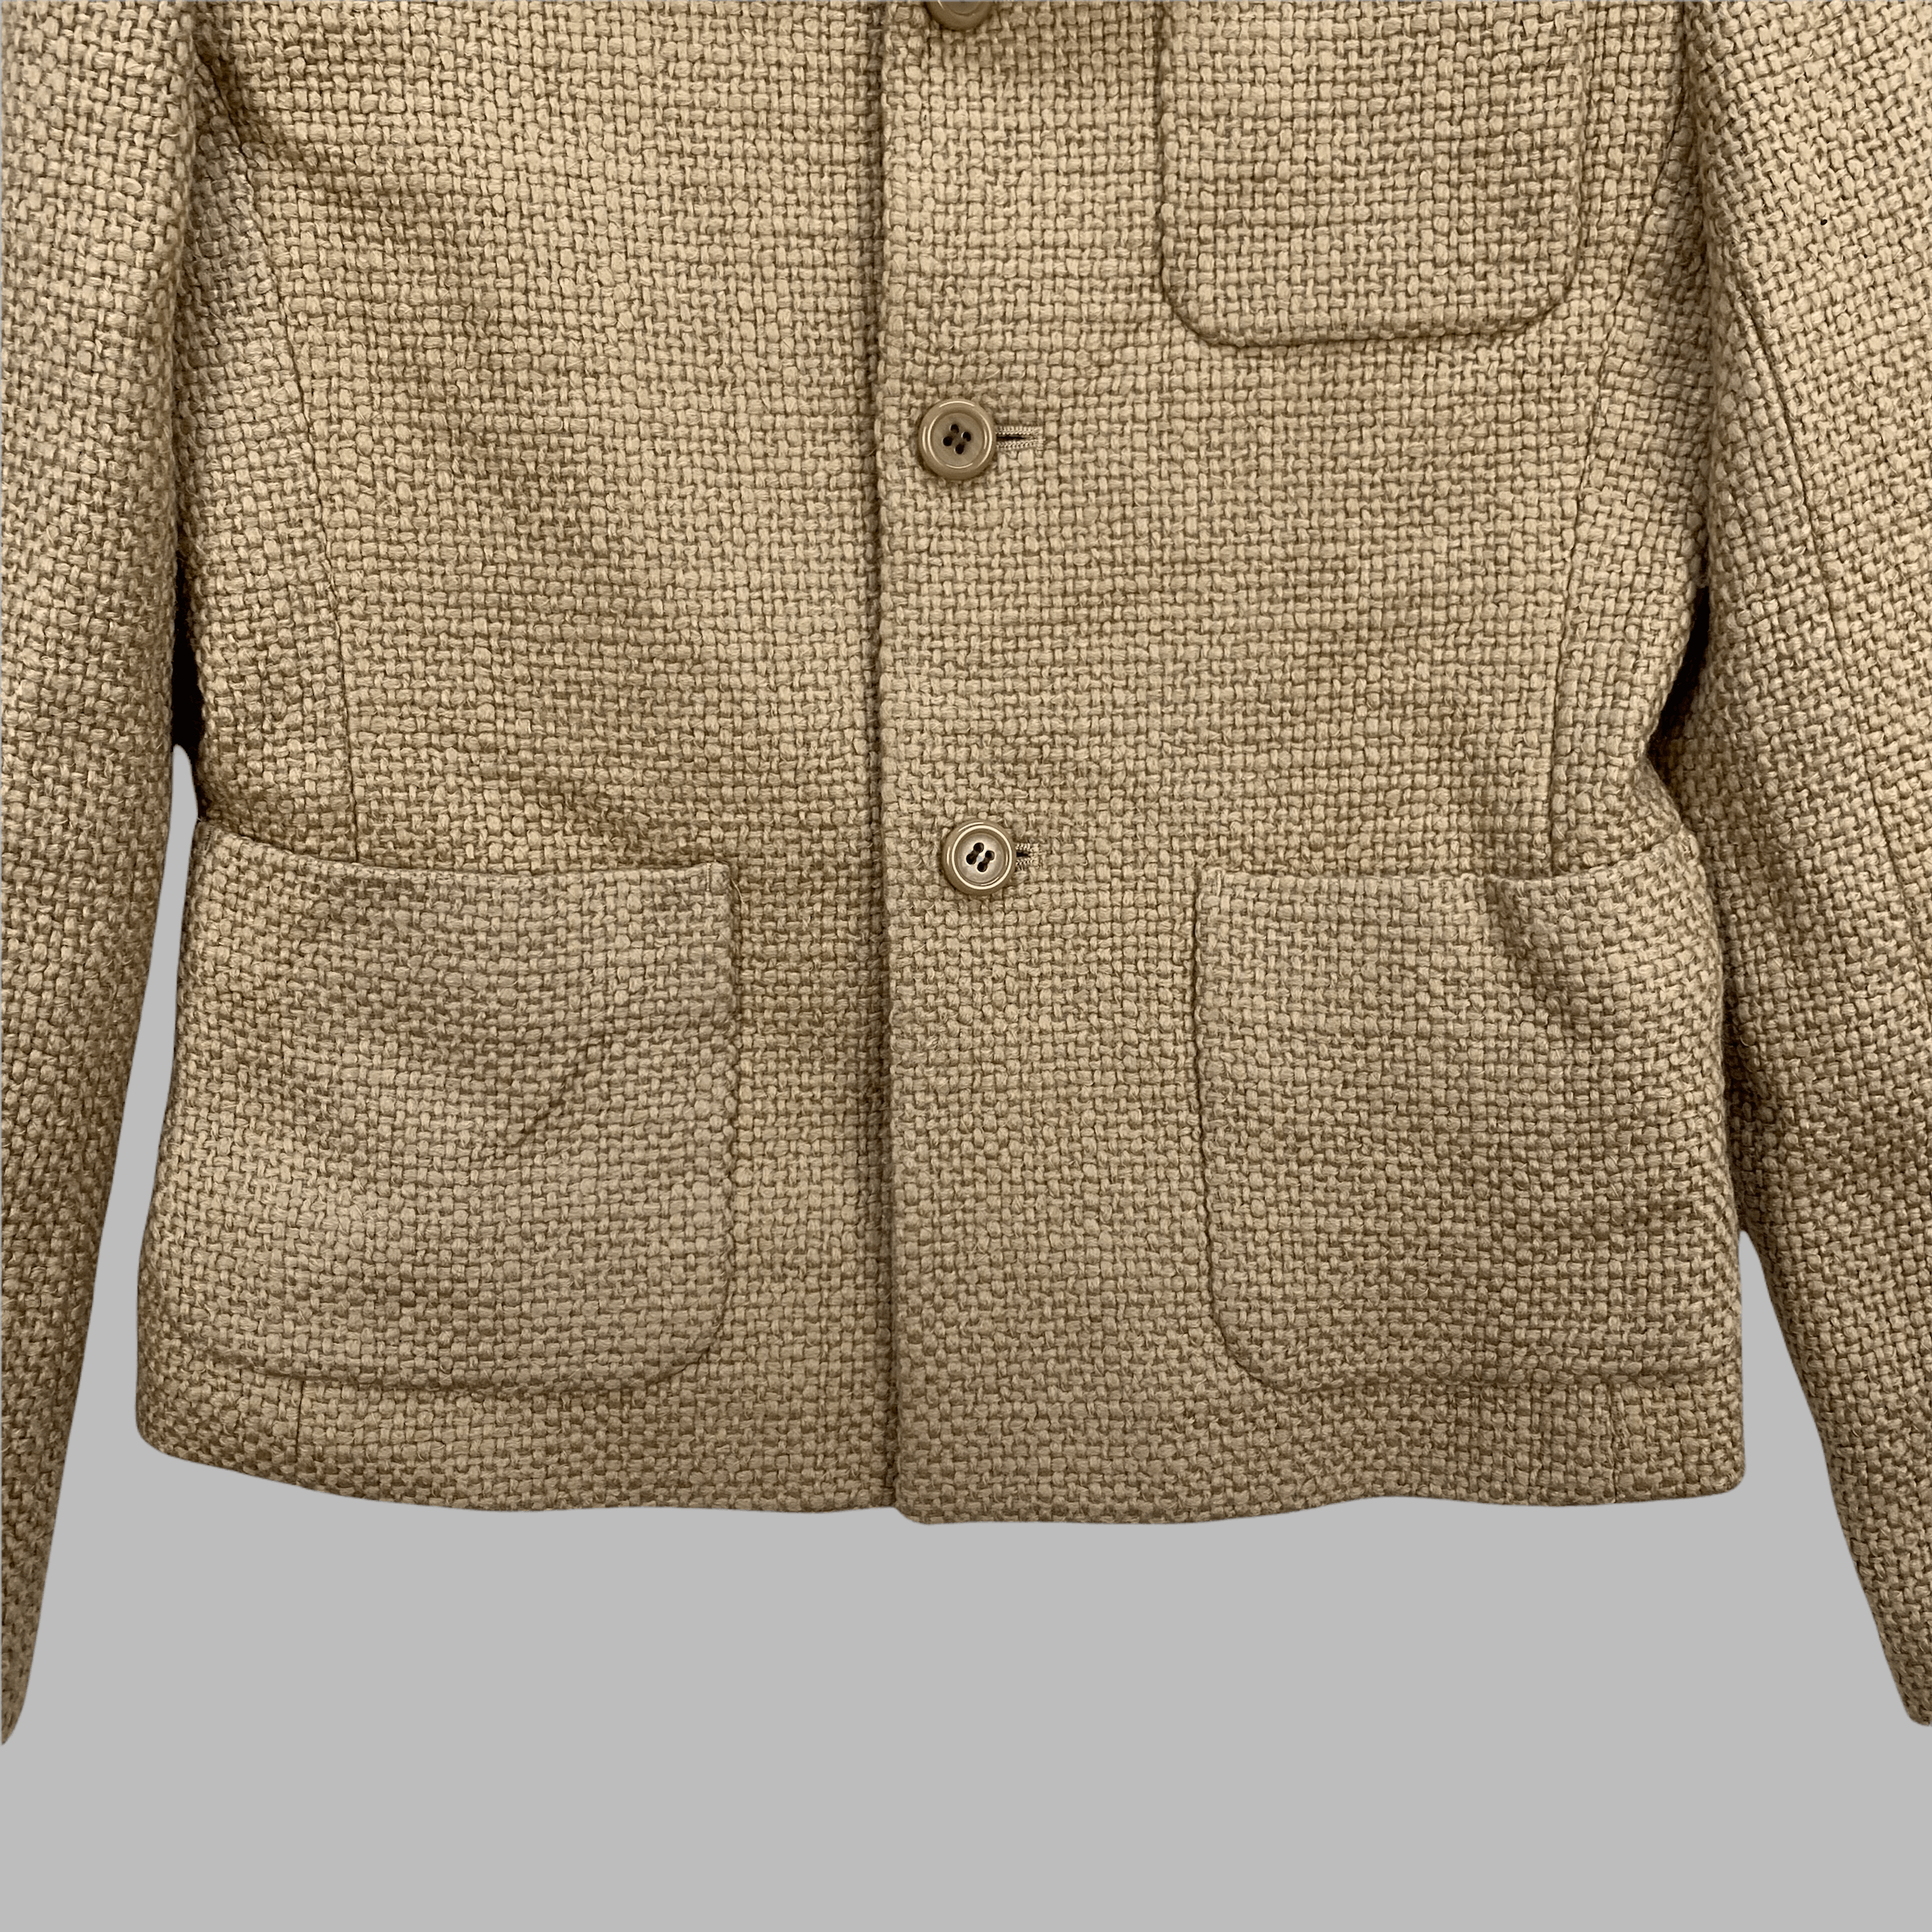 INED Coat Jacket #3697-129 - 3